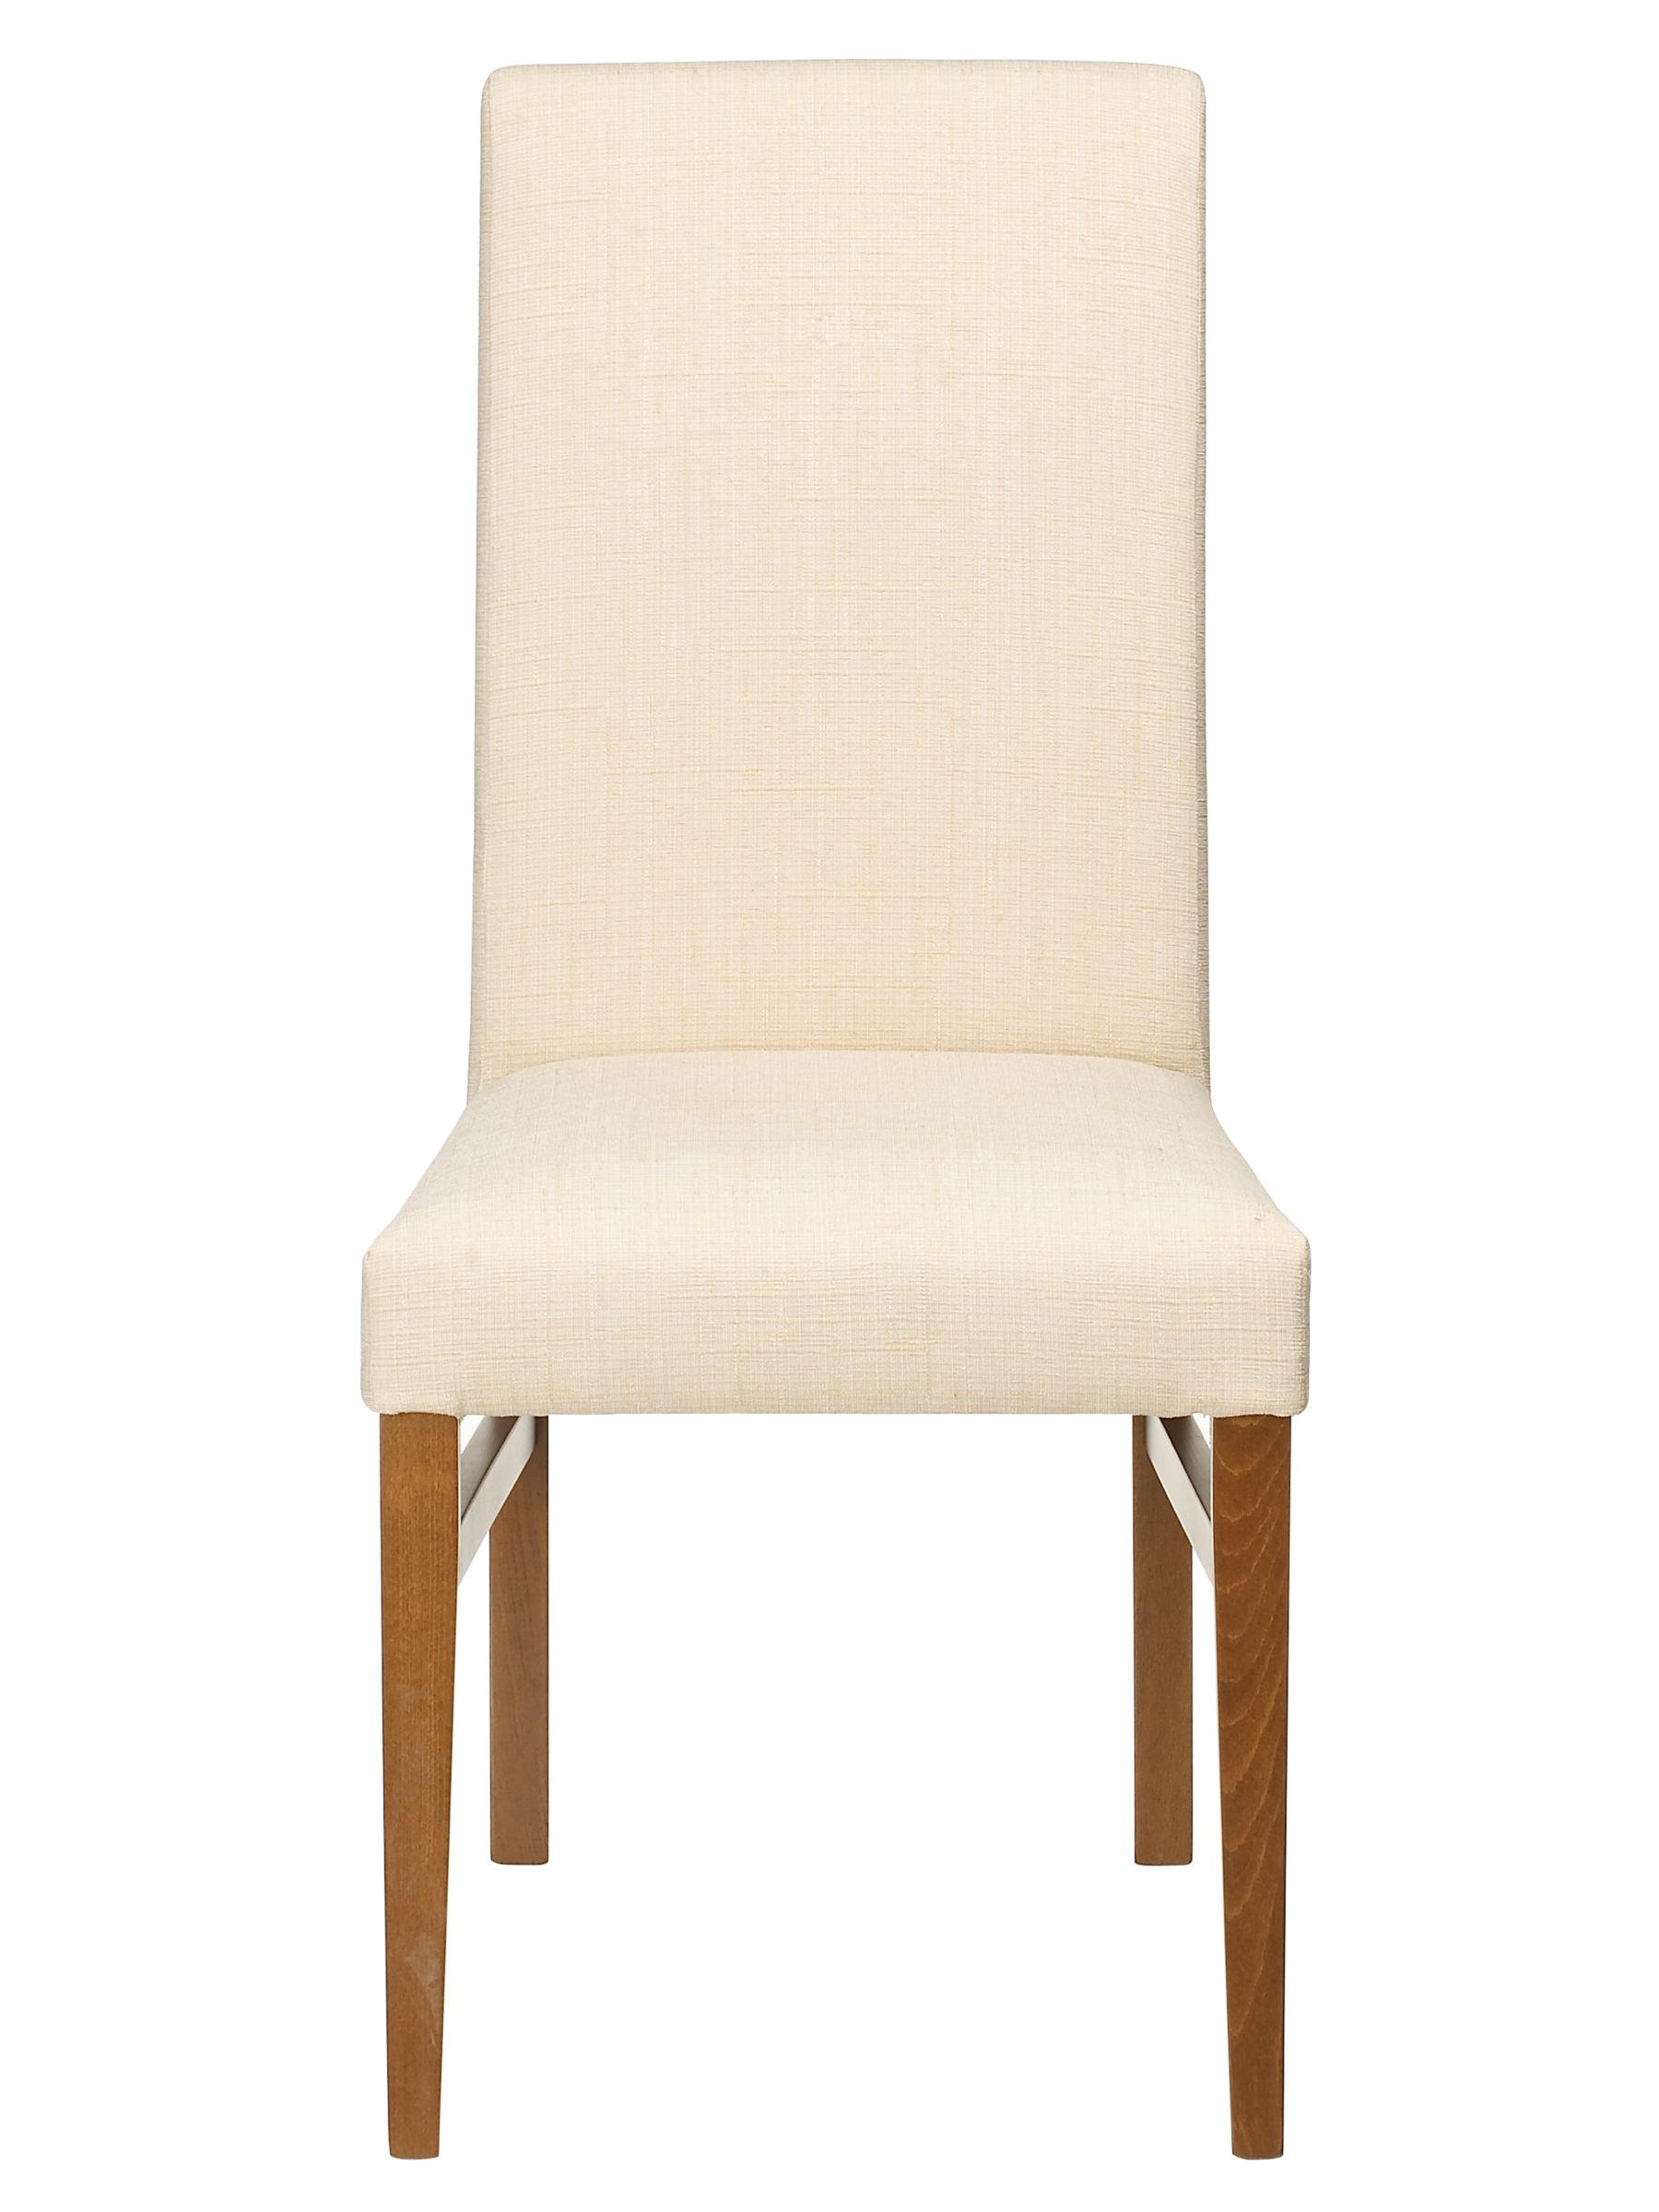 John Lewis Sumba Dining Chair, Beige Fabric